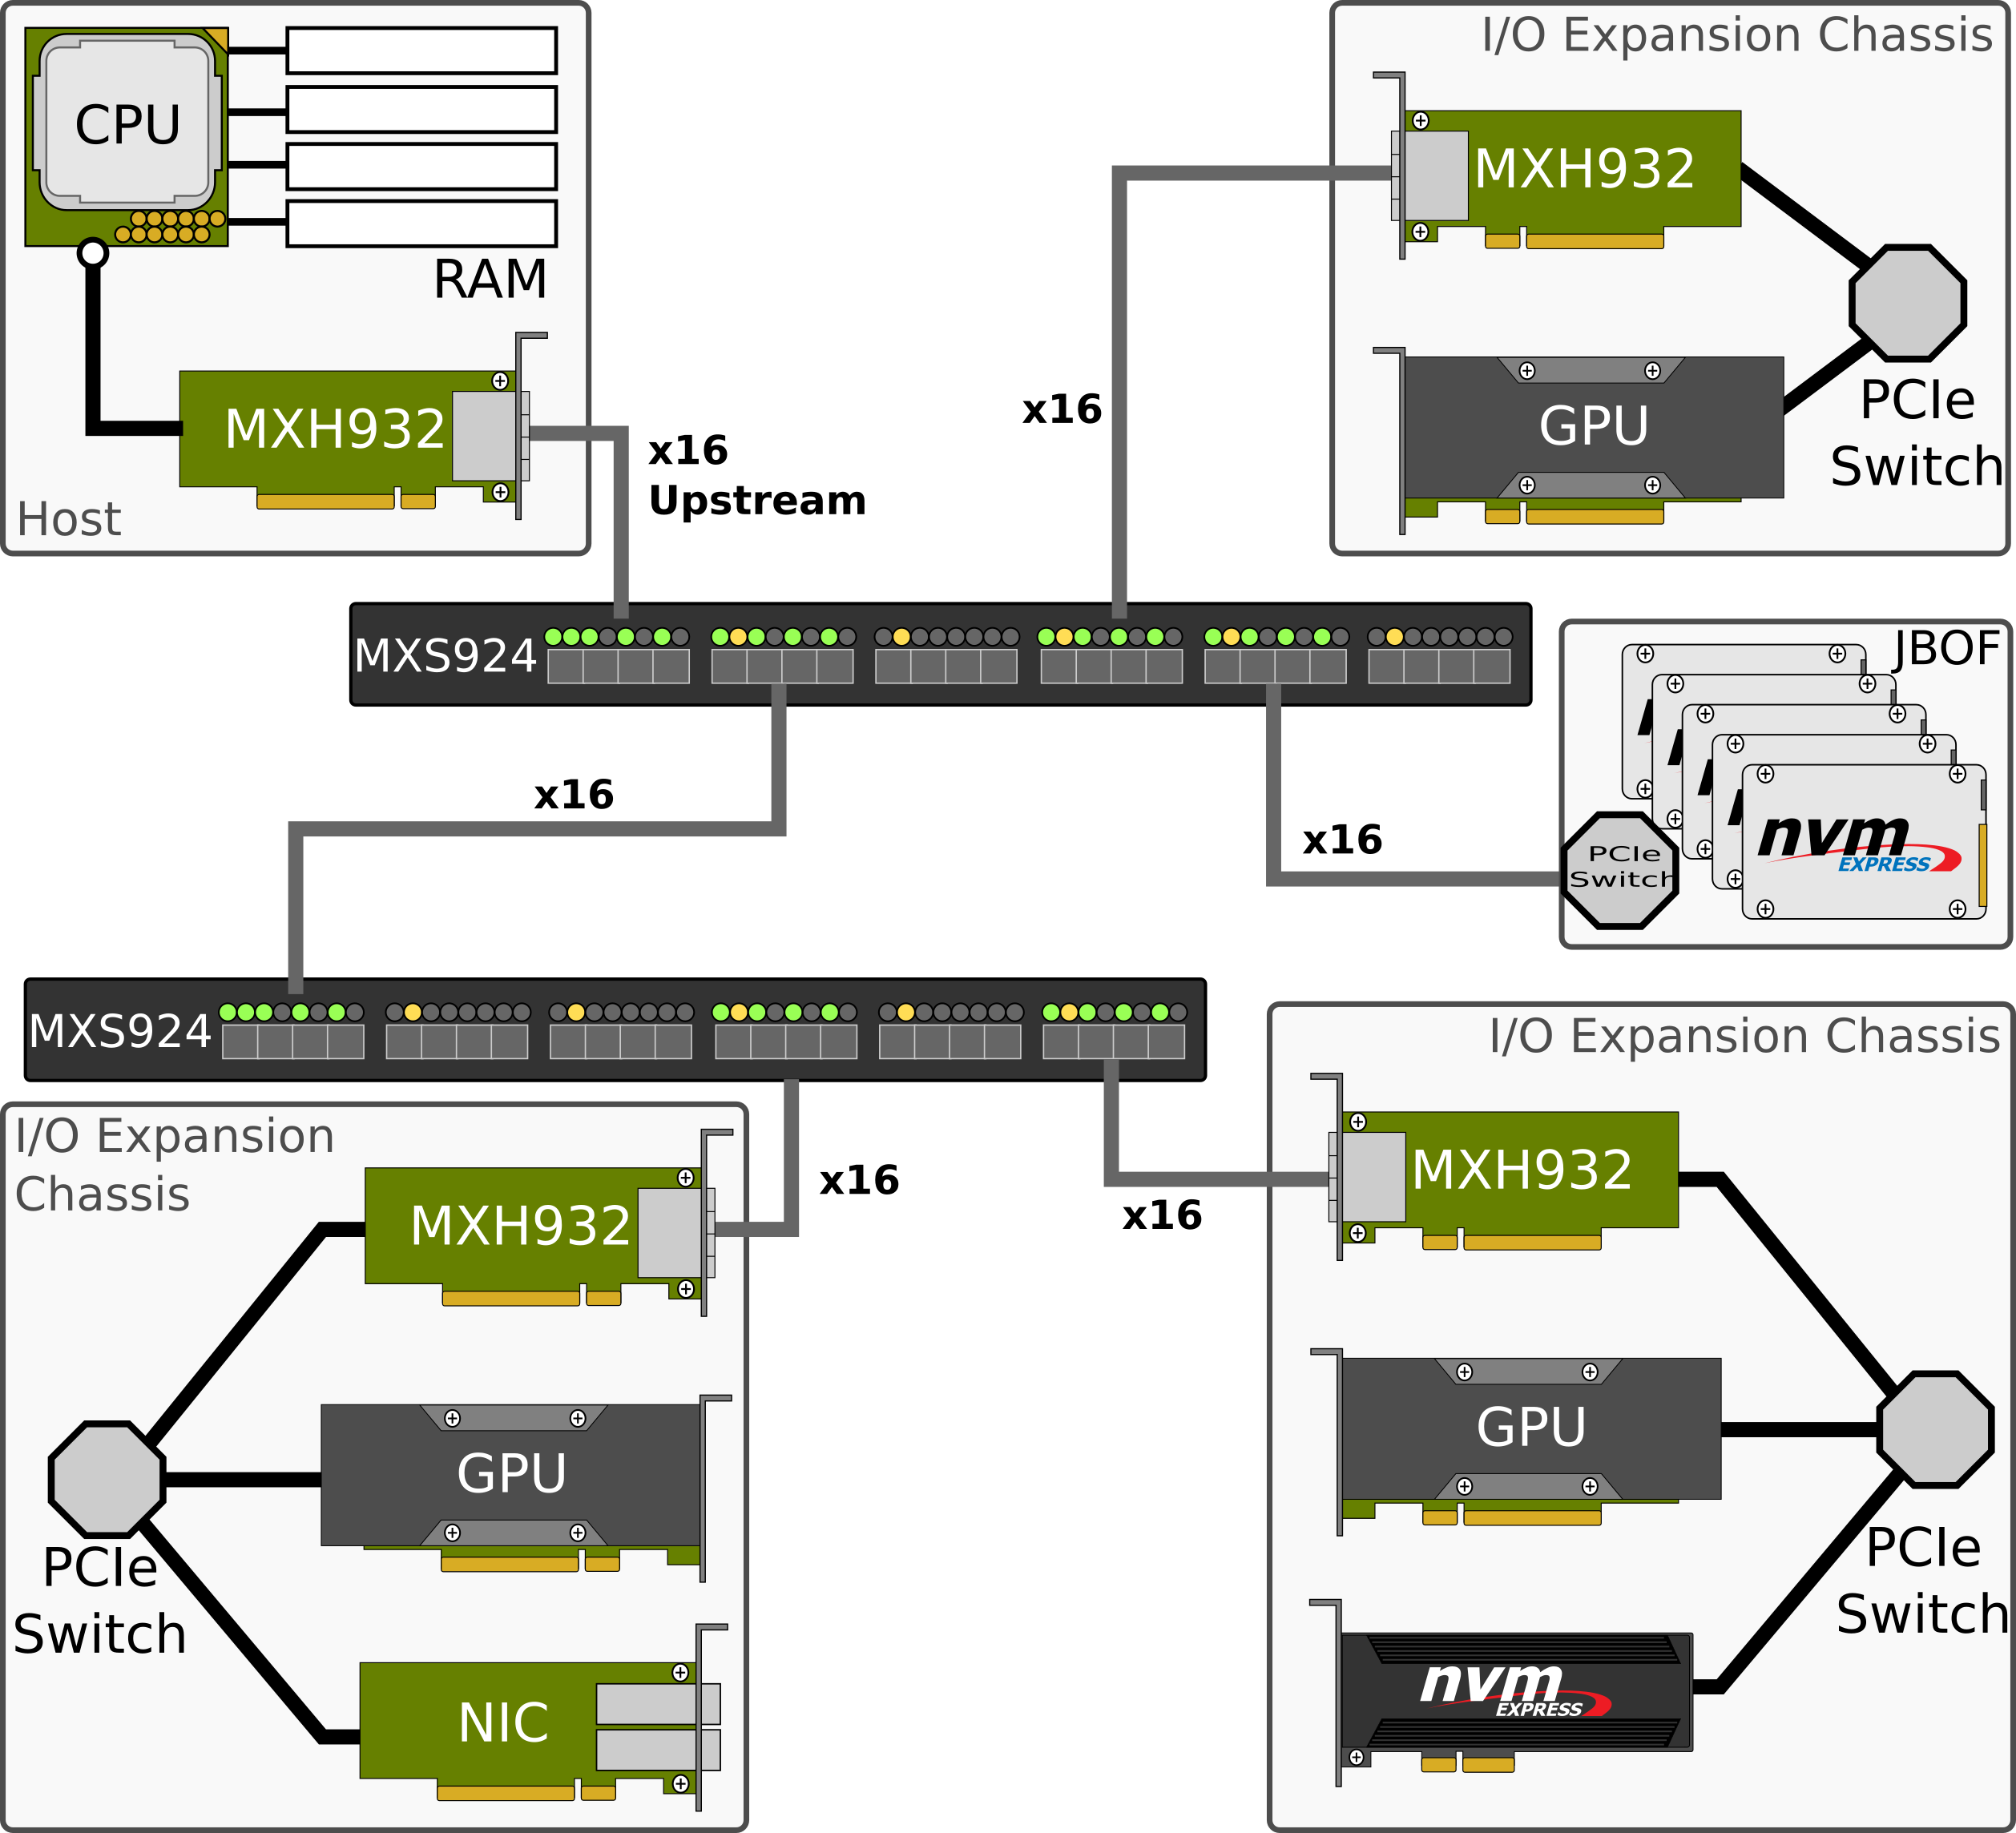 MXS924 PCI Express switch transparent topology